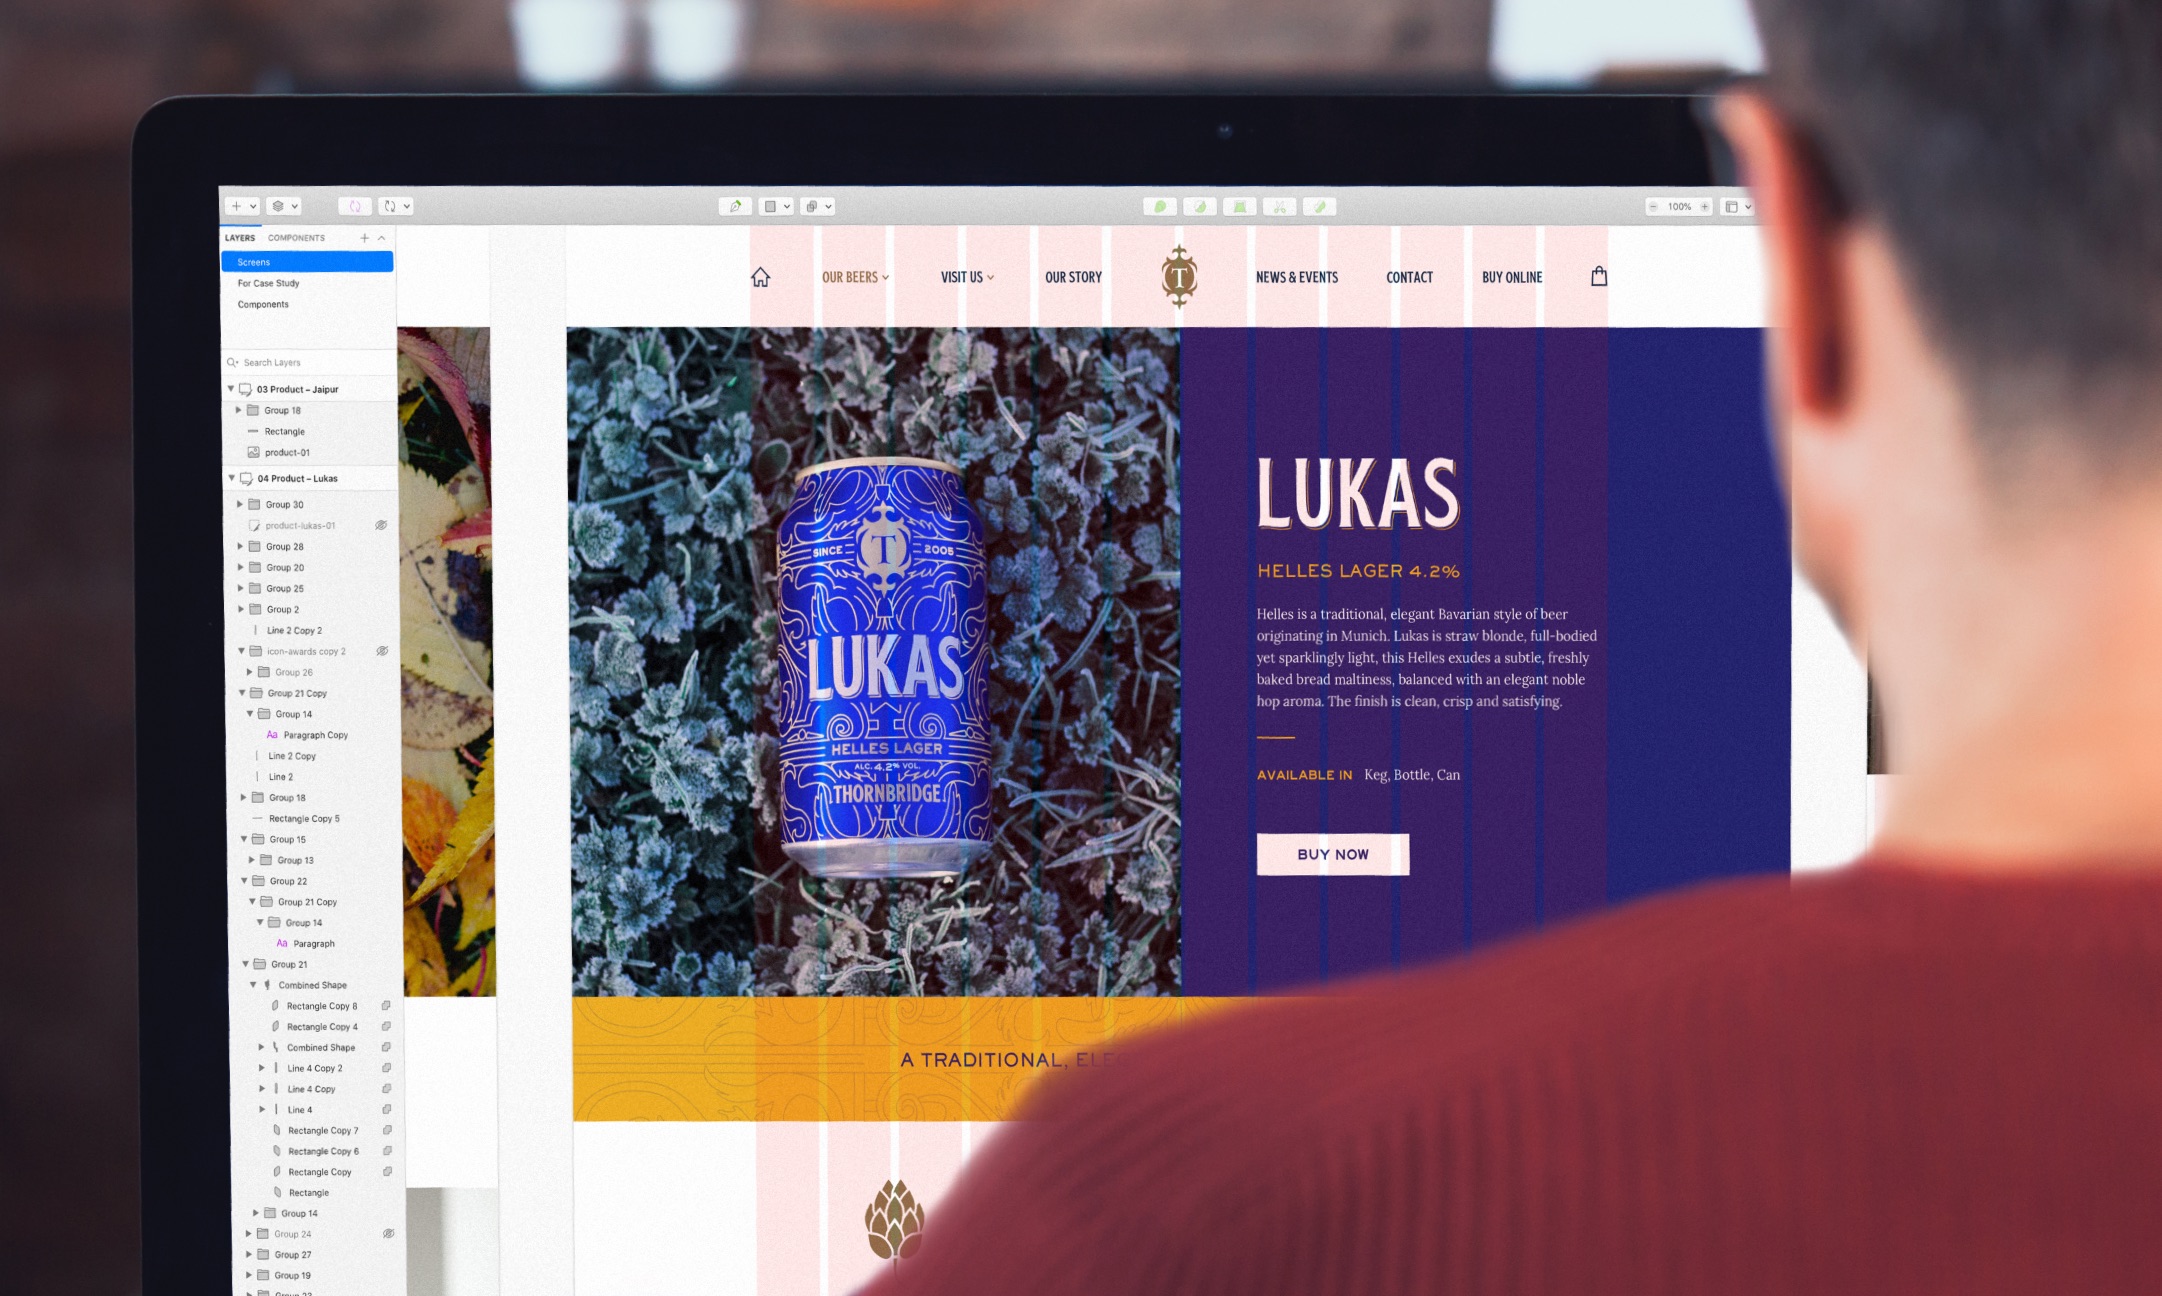 Thornbridge Brewery website screenshot (Lukas beer)